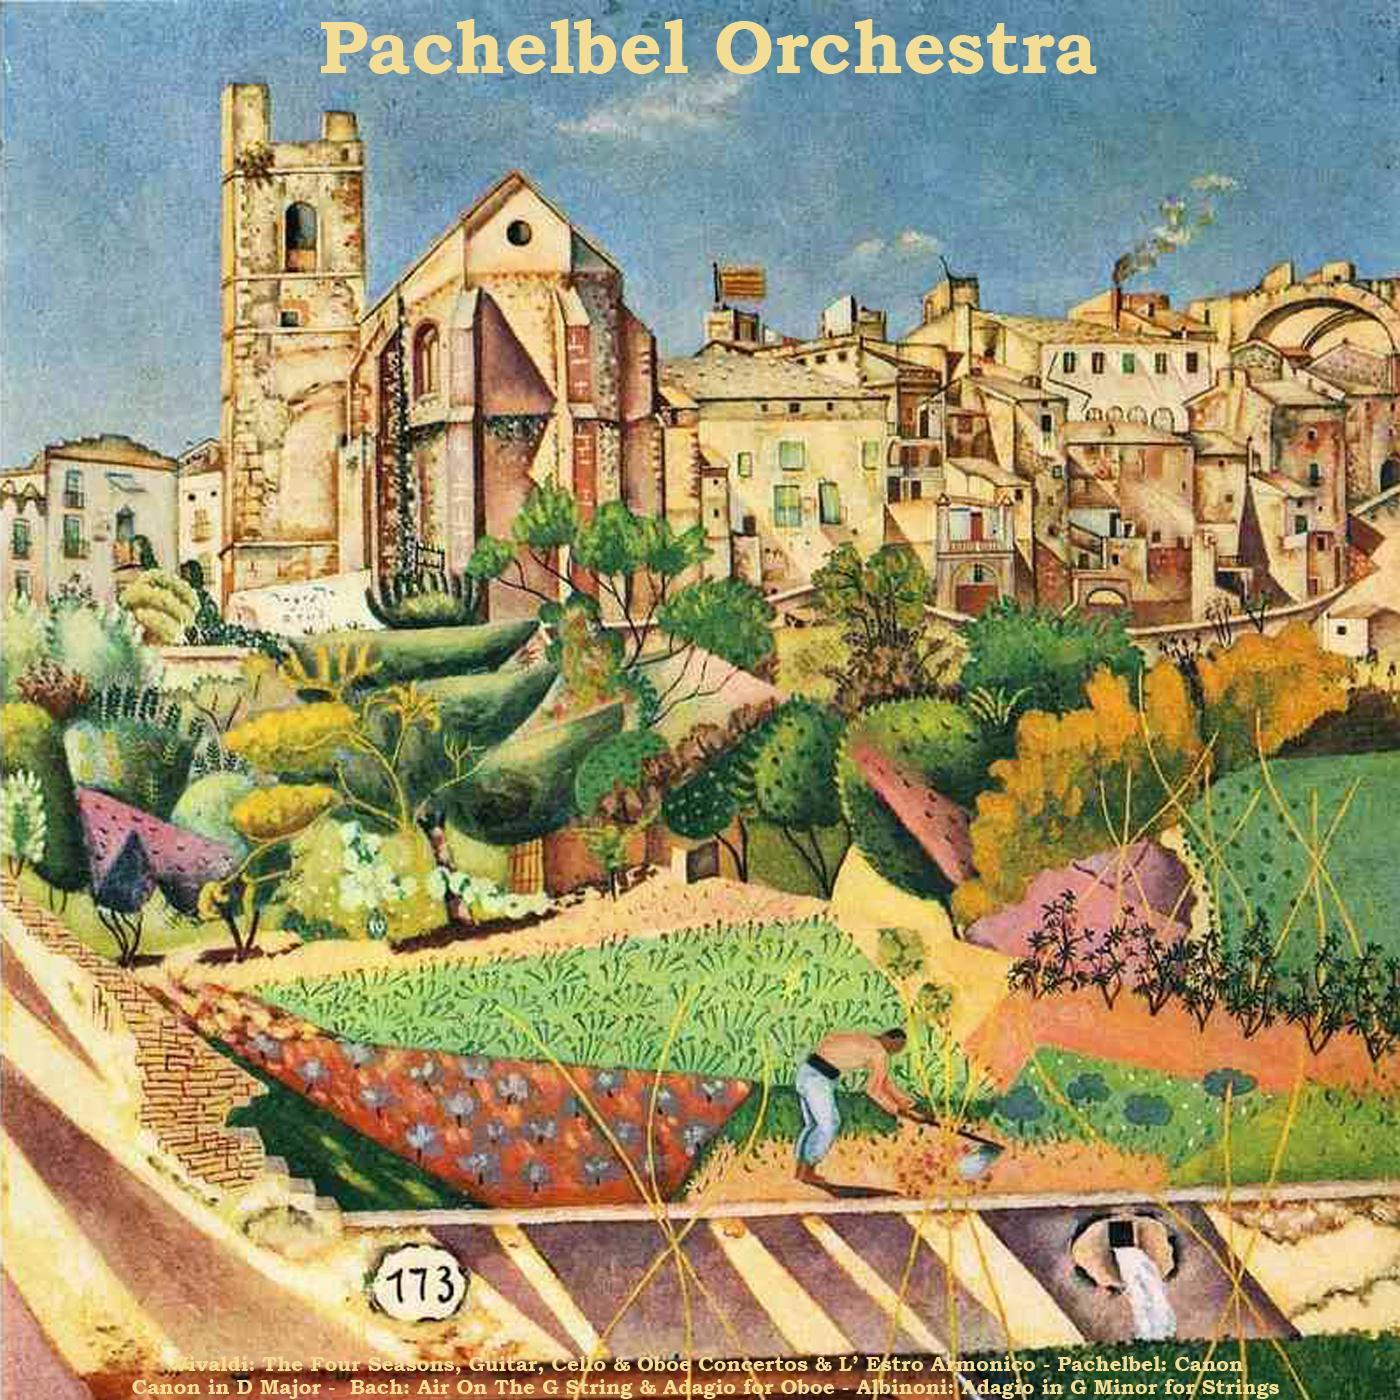 Pachelbel Orchestra - Concerto for Strings and Basso Continuo in D Major, Rv 121: I. Allegro molto